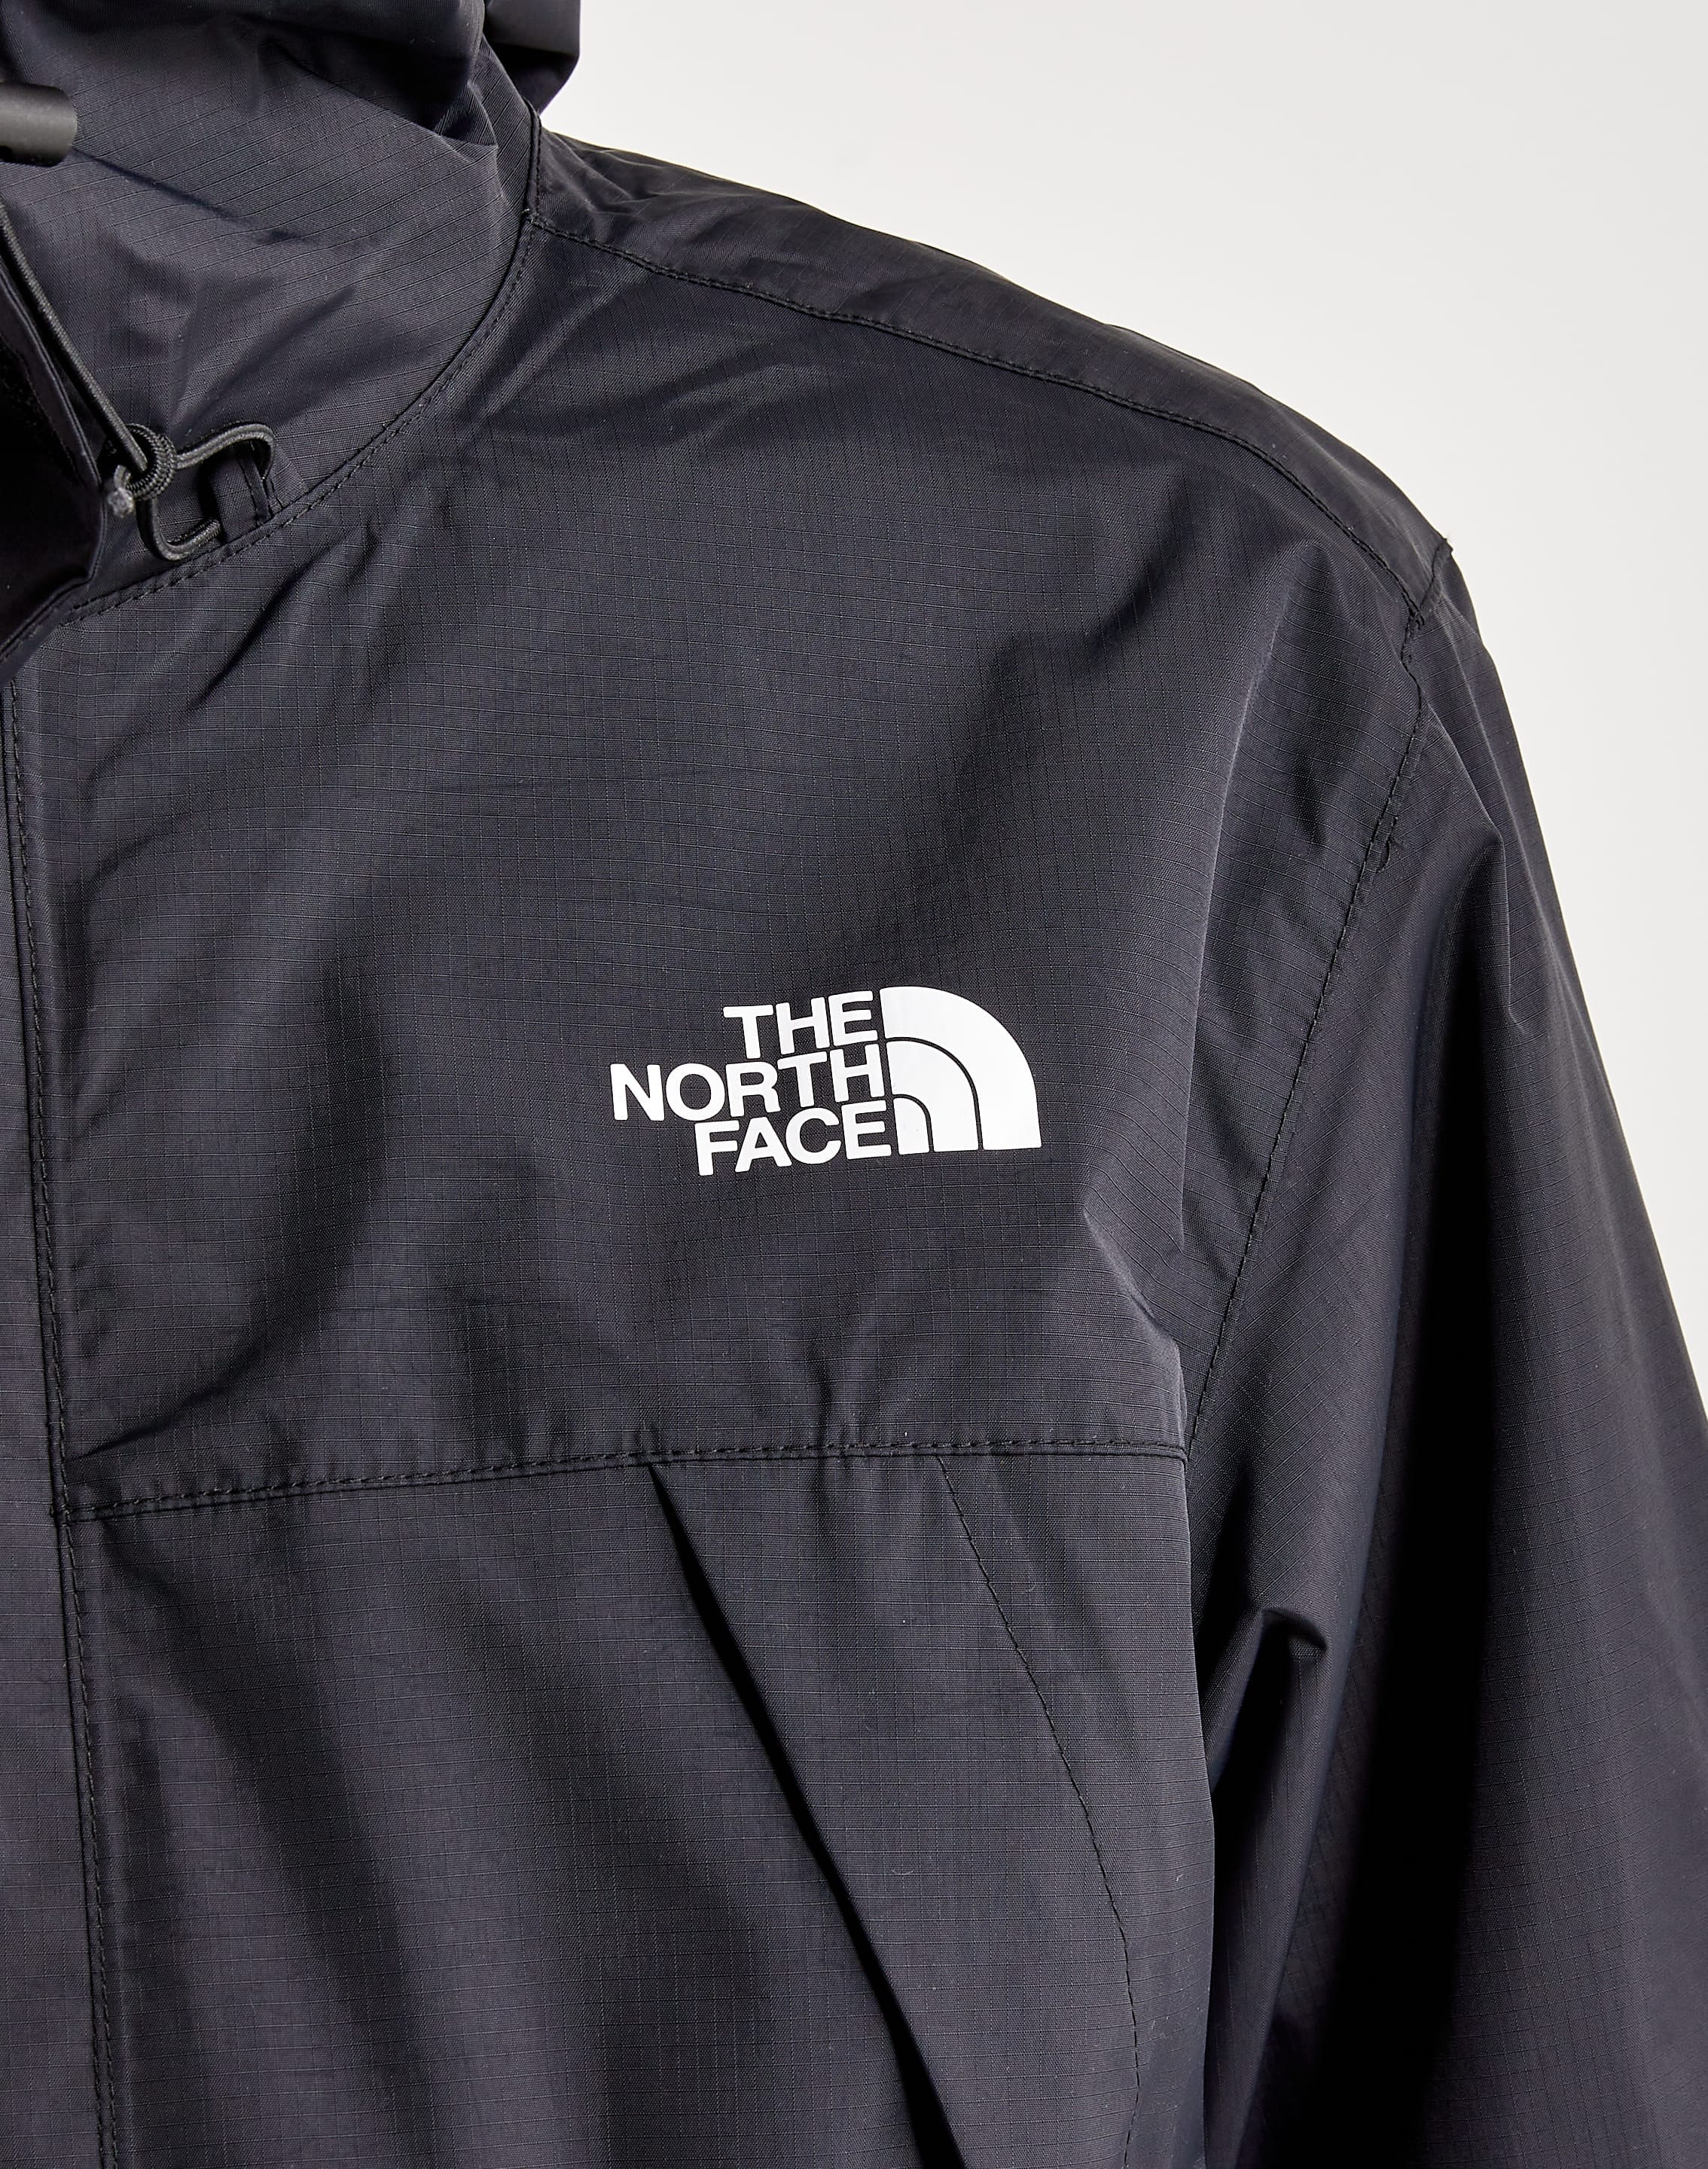 The North Face Antora Jacket – DTLR